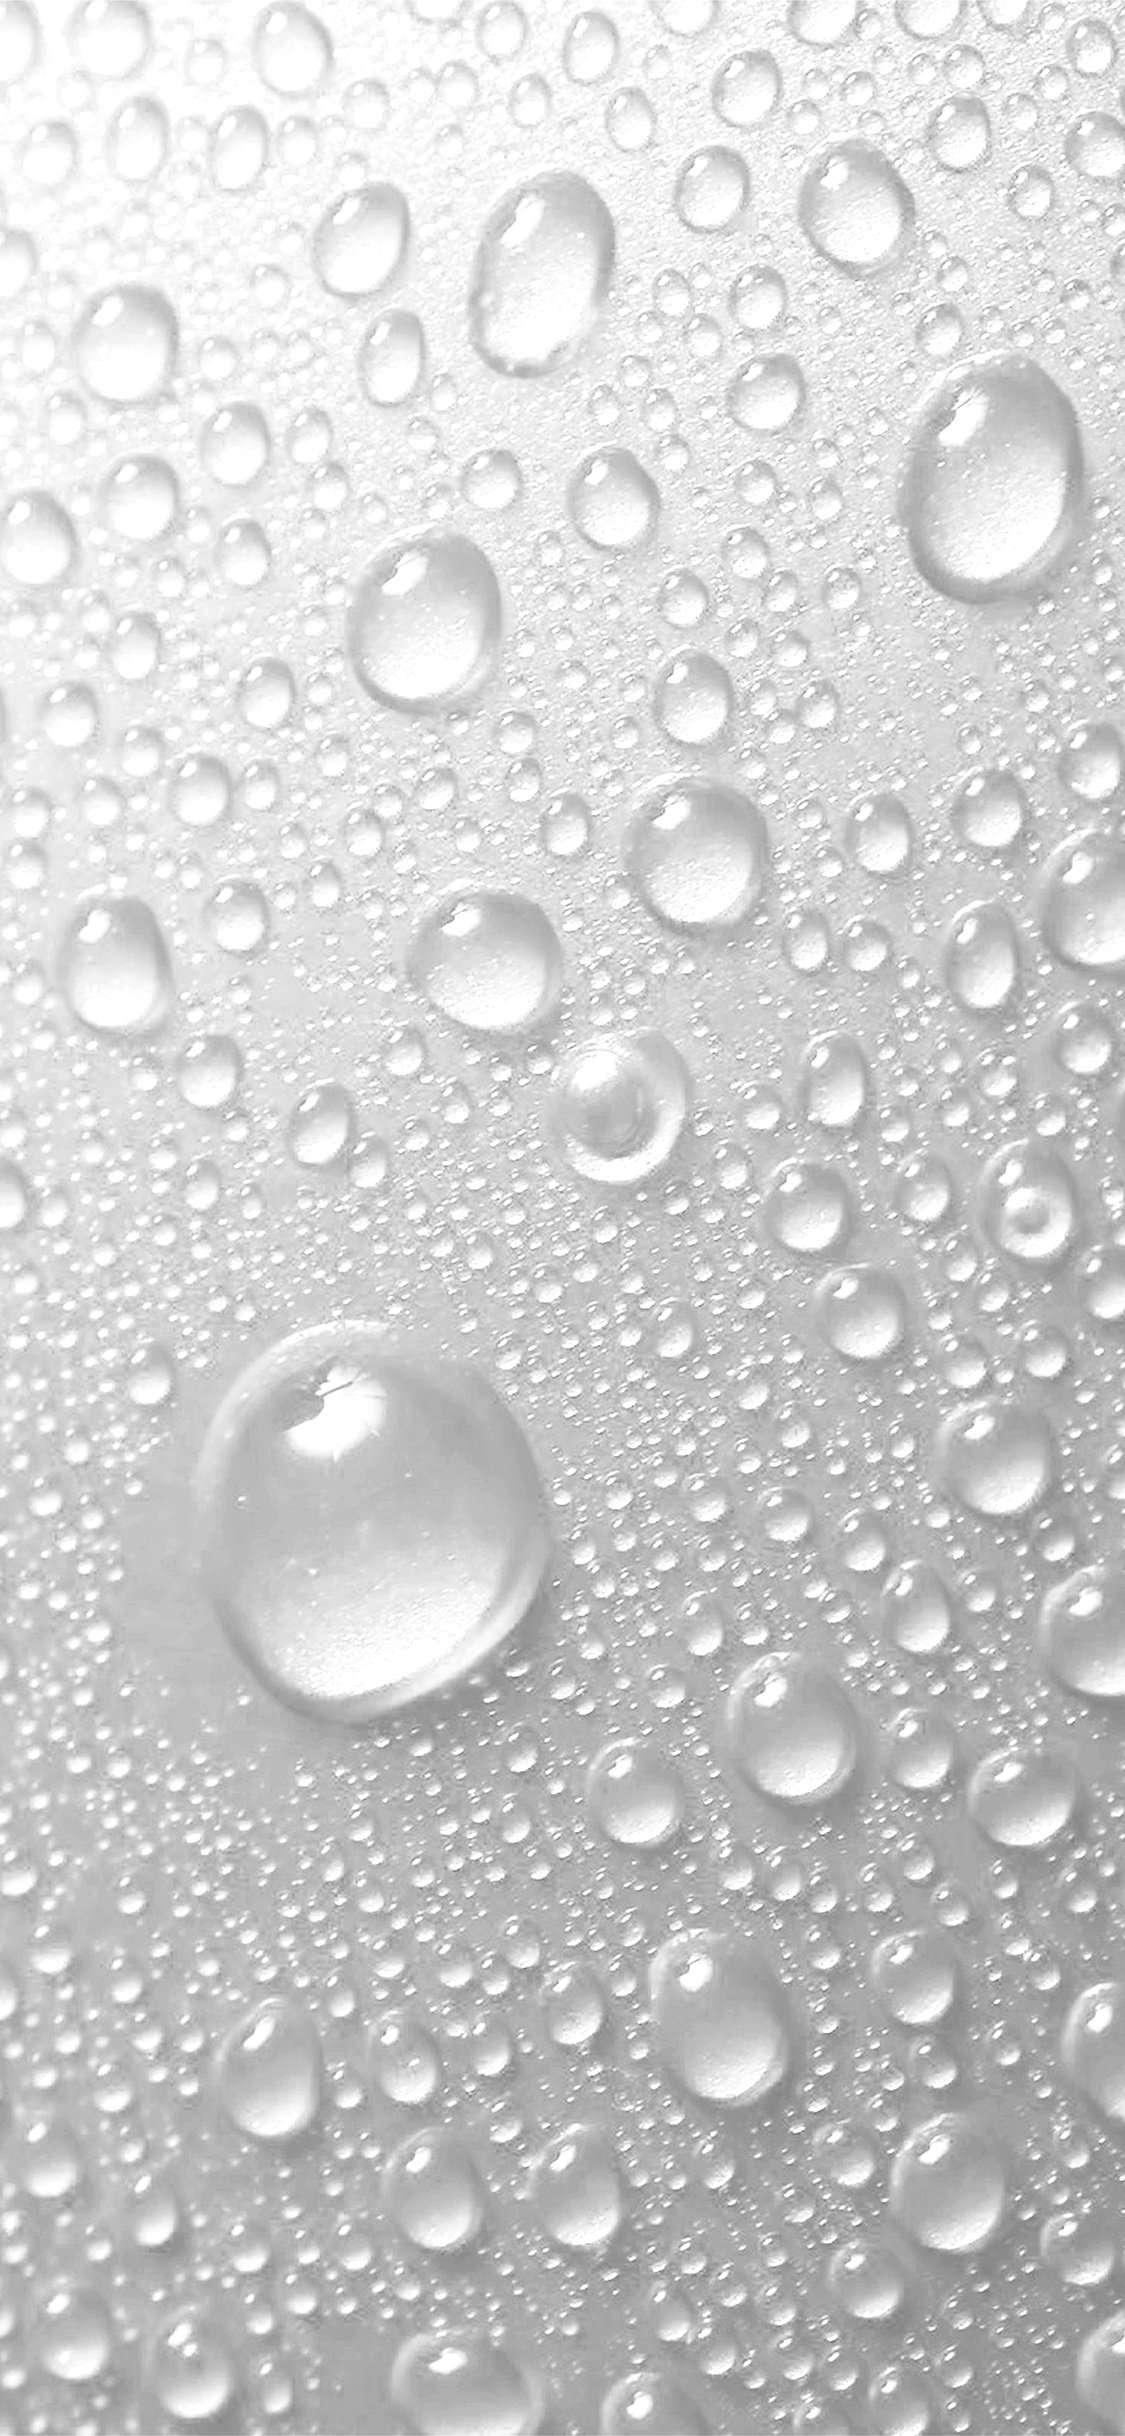 iPhone X wallpaper. rain drop bw white water sad pattern